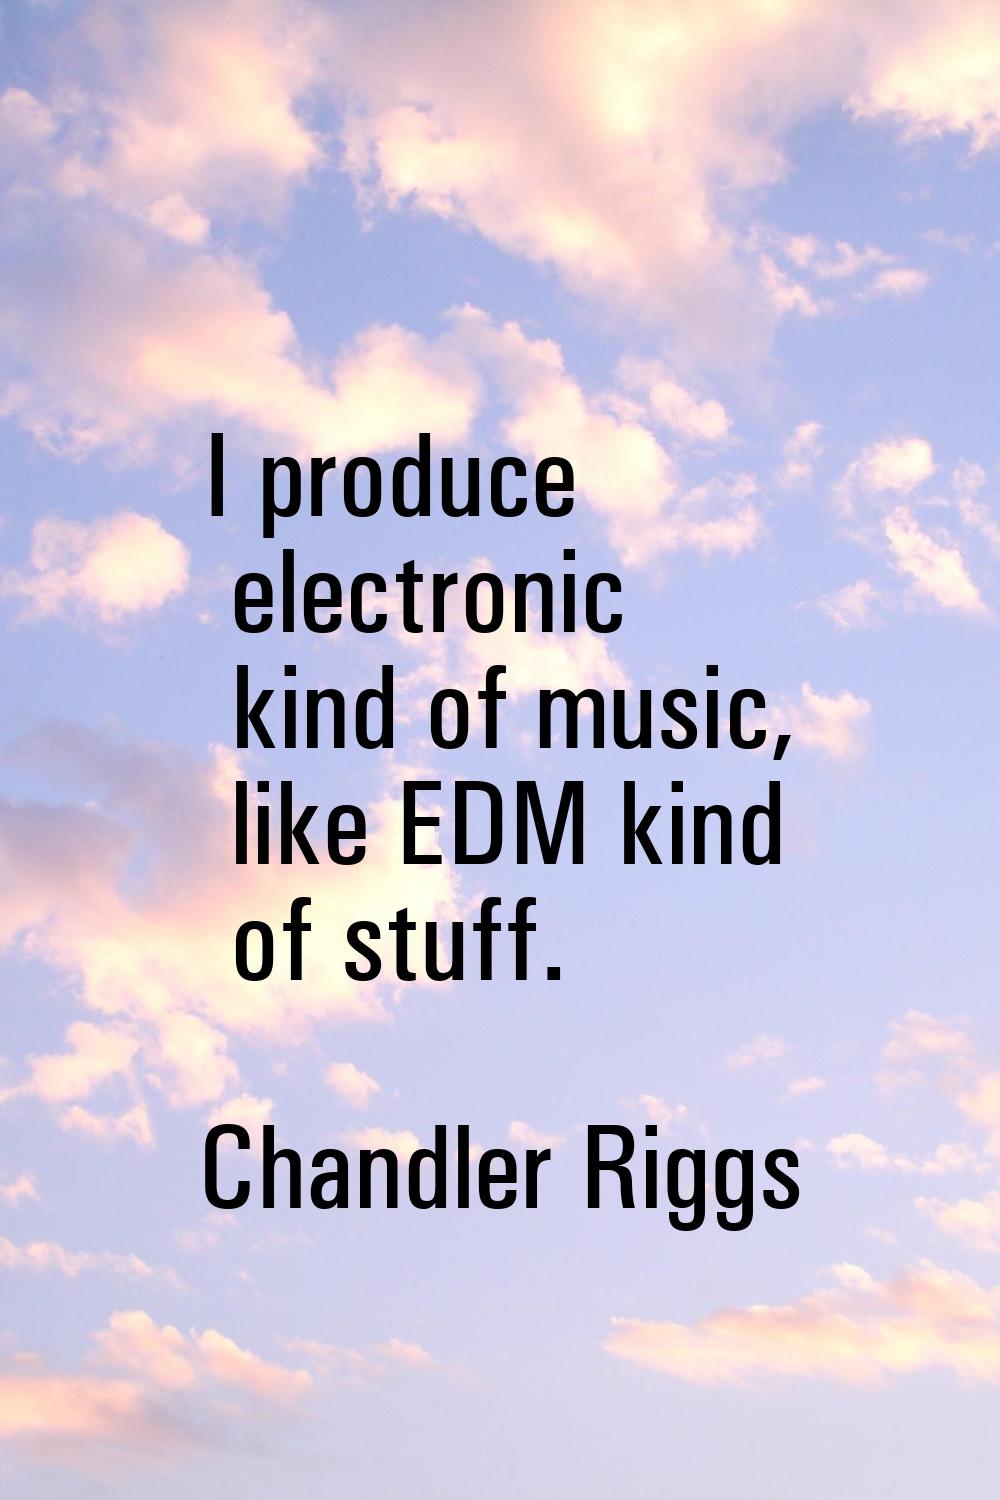 I produce electronic kind of music, like EDM kind of stuff.